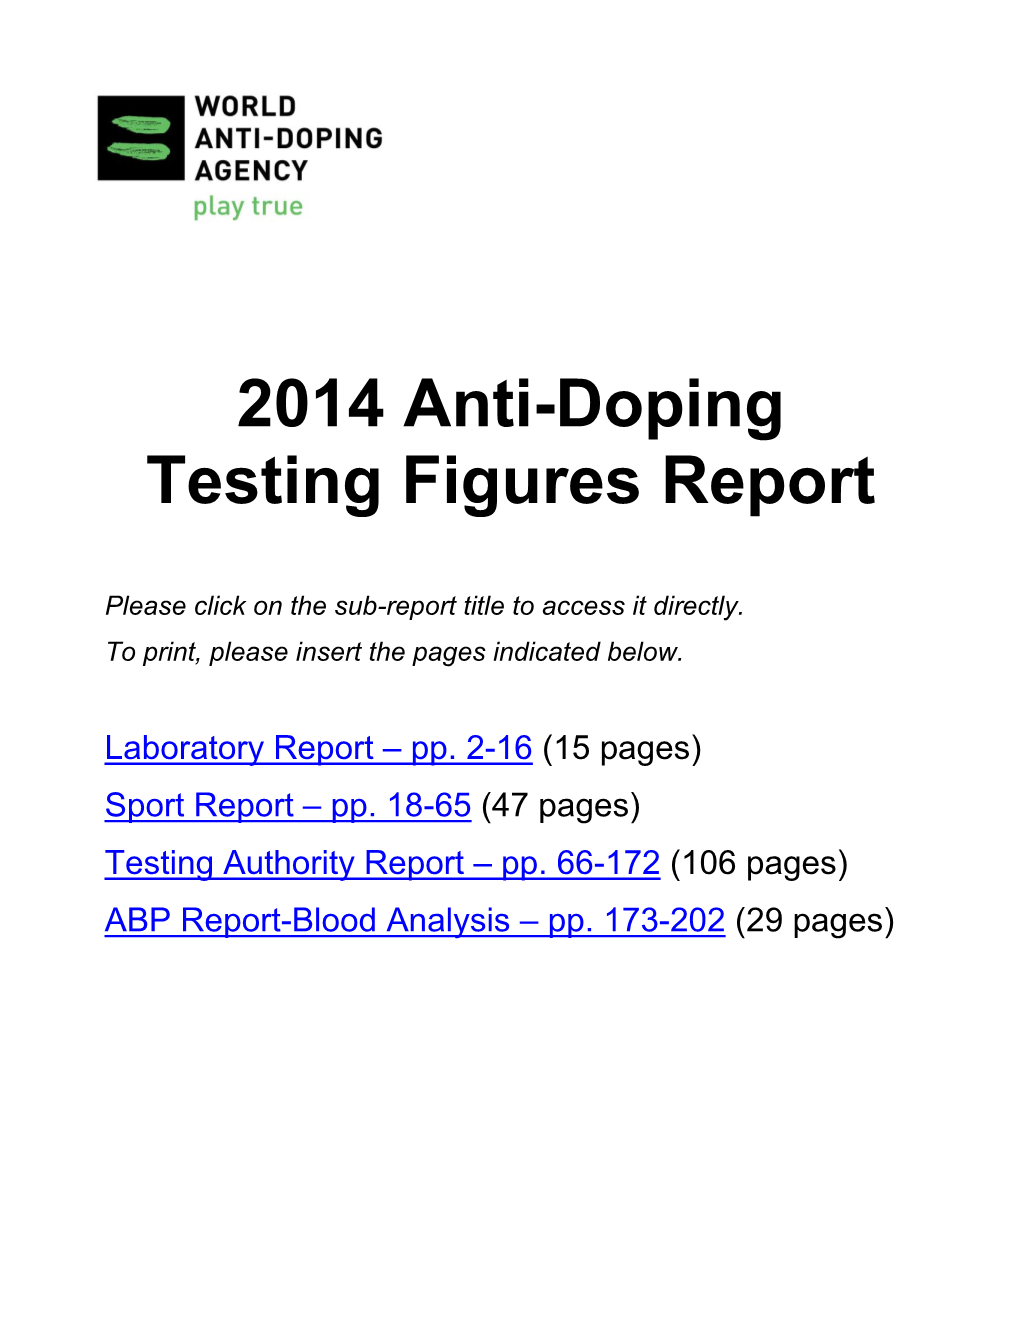 2014 Anti-Doping Testing Figures Report